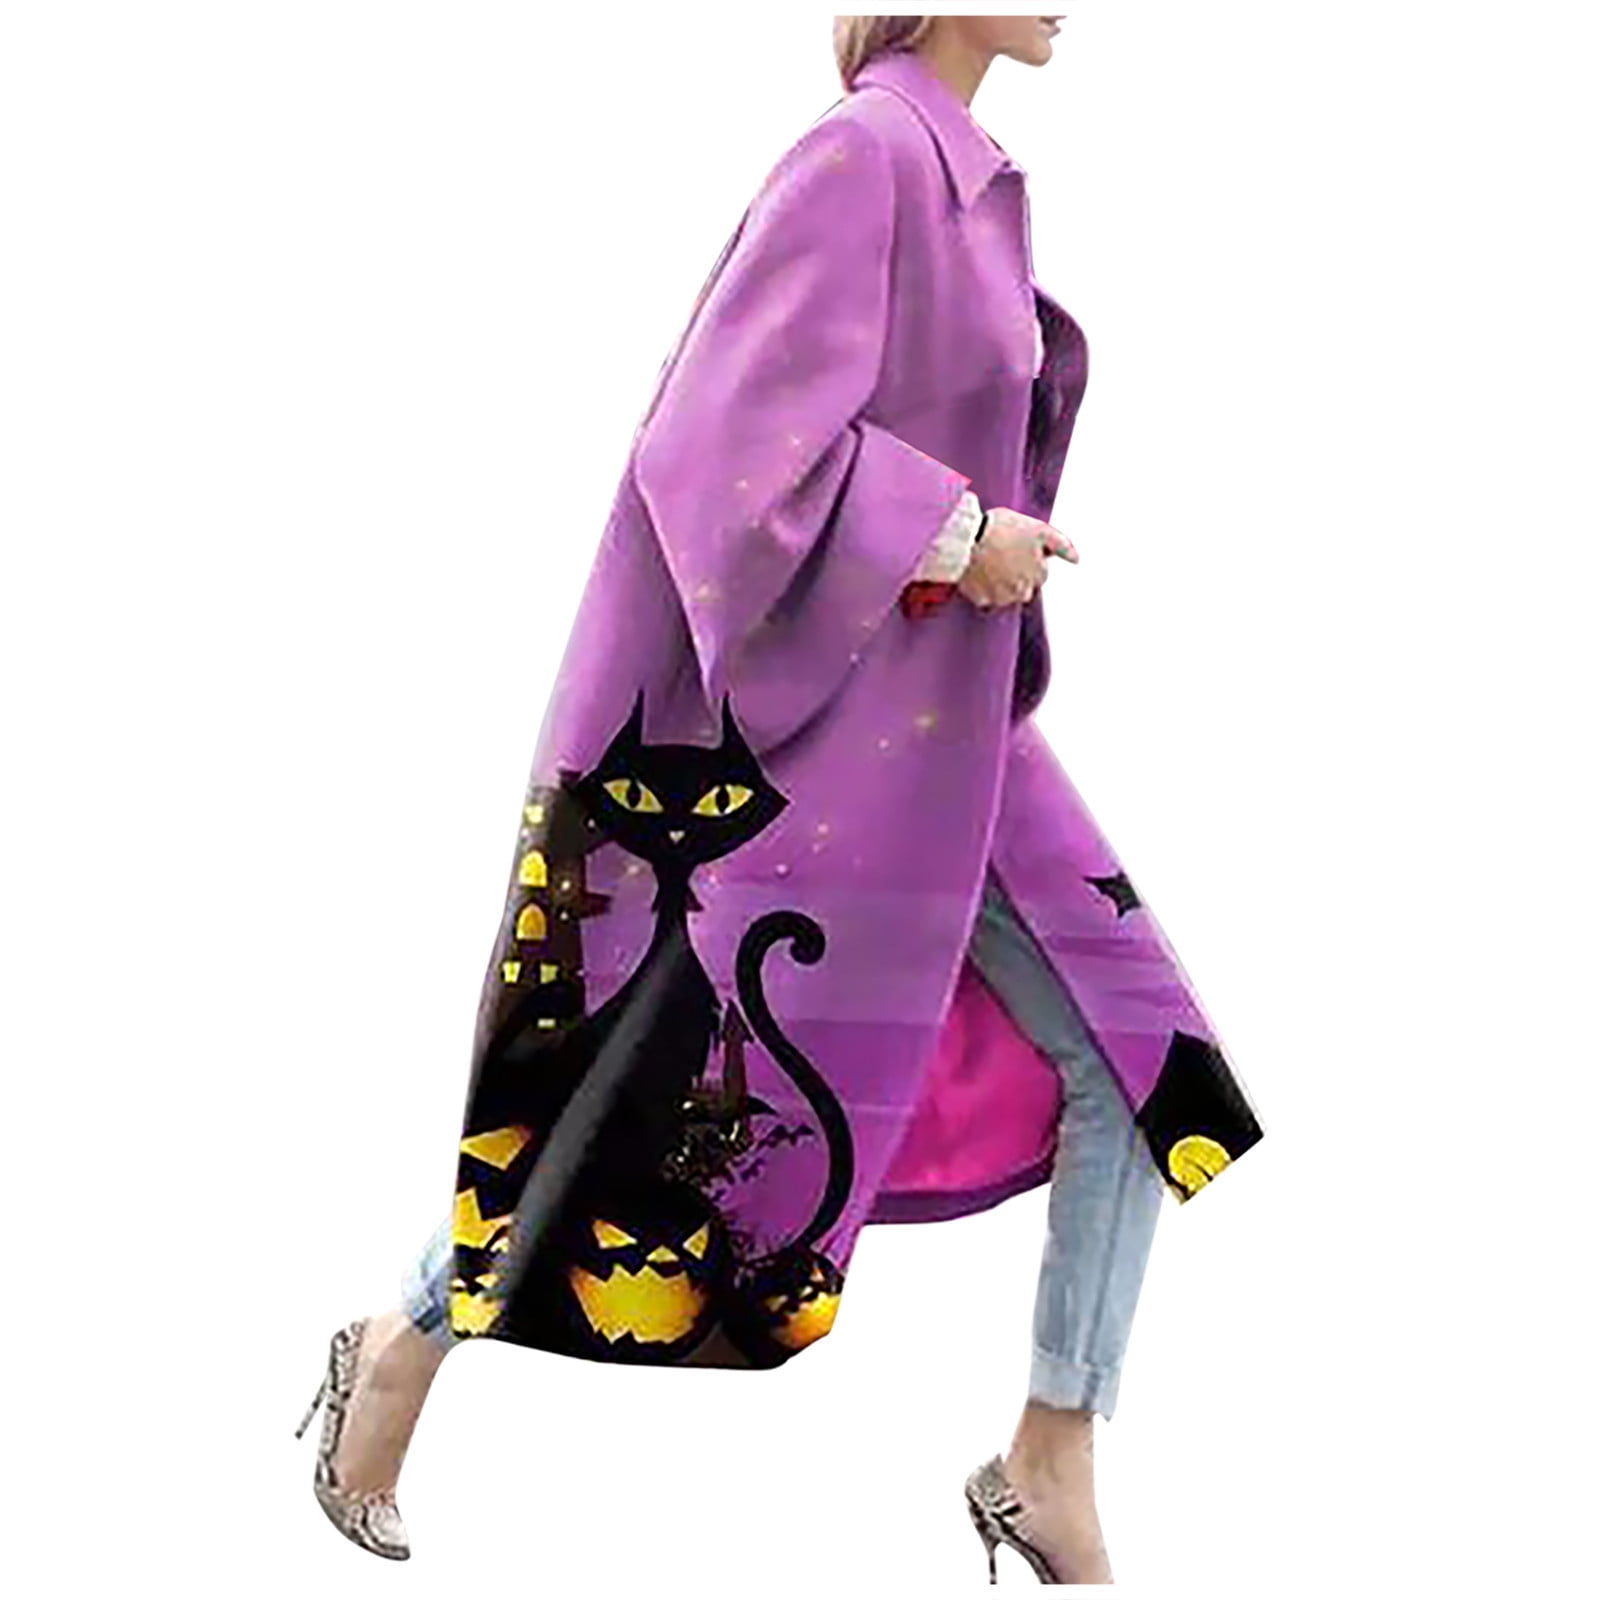 QIPOPIQ Clearance Jackets for Women Fashion Women Printed Pocket Jacket  Outerwear Cardigan Overcoat Long Trench Coat 